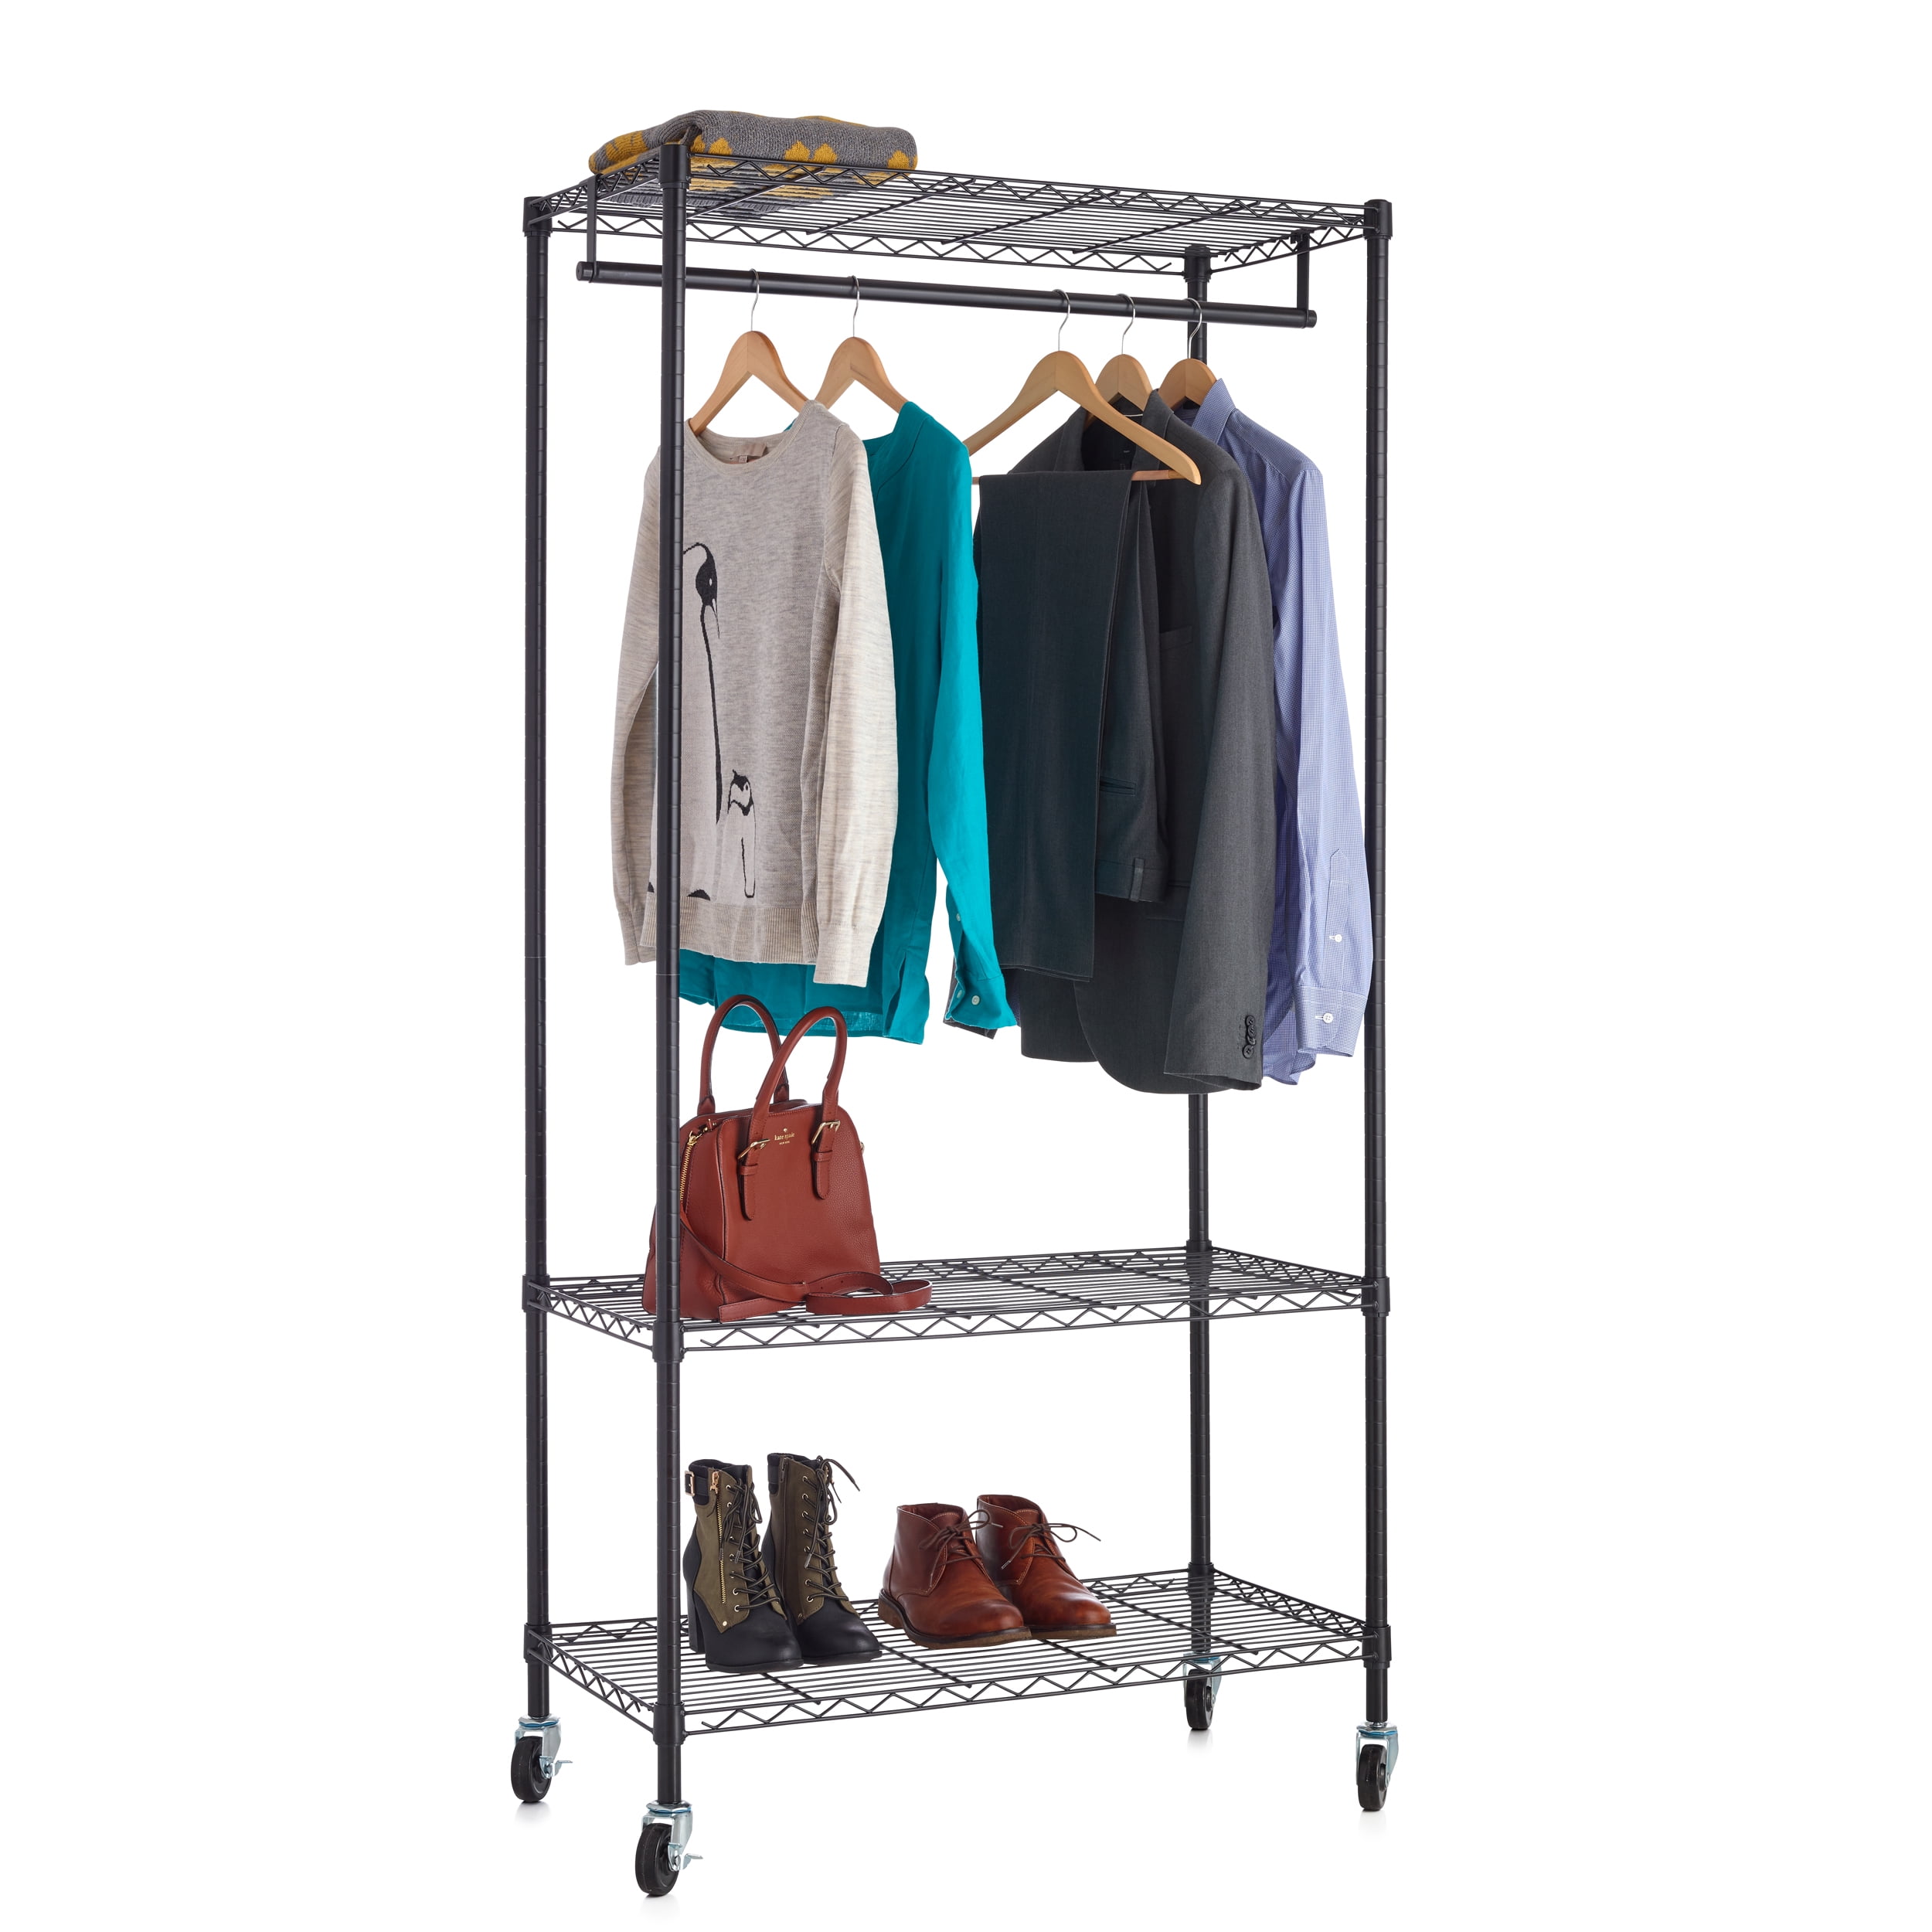 Details about   3-Tier Clothes Rail Closet Storage Garment Rack Organiser Hanger Shelf Hooks USA 